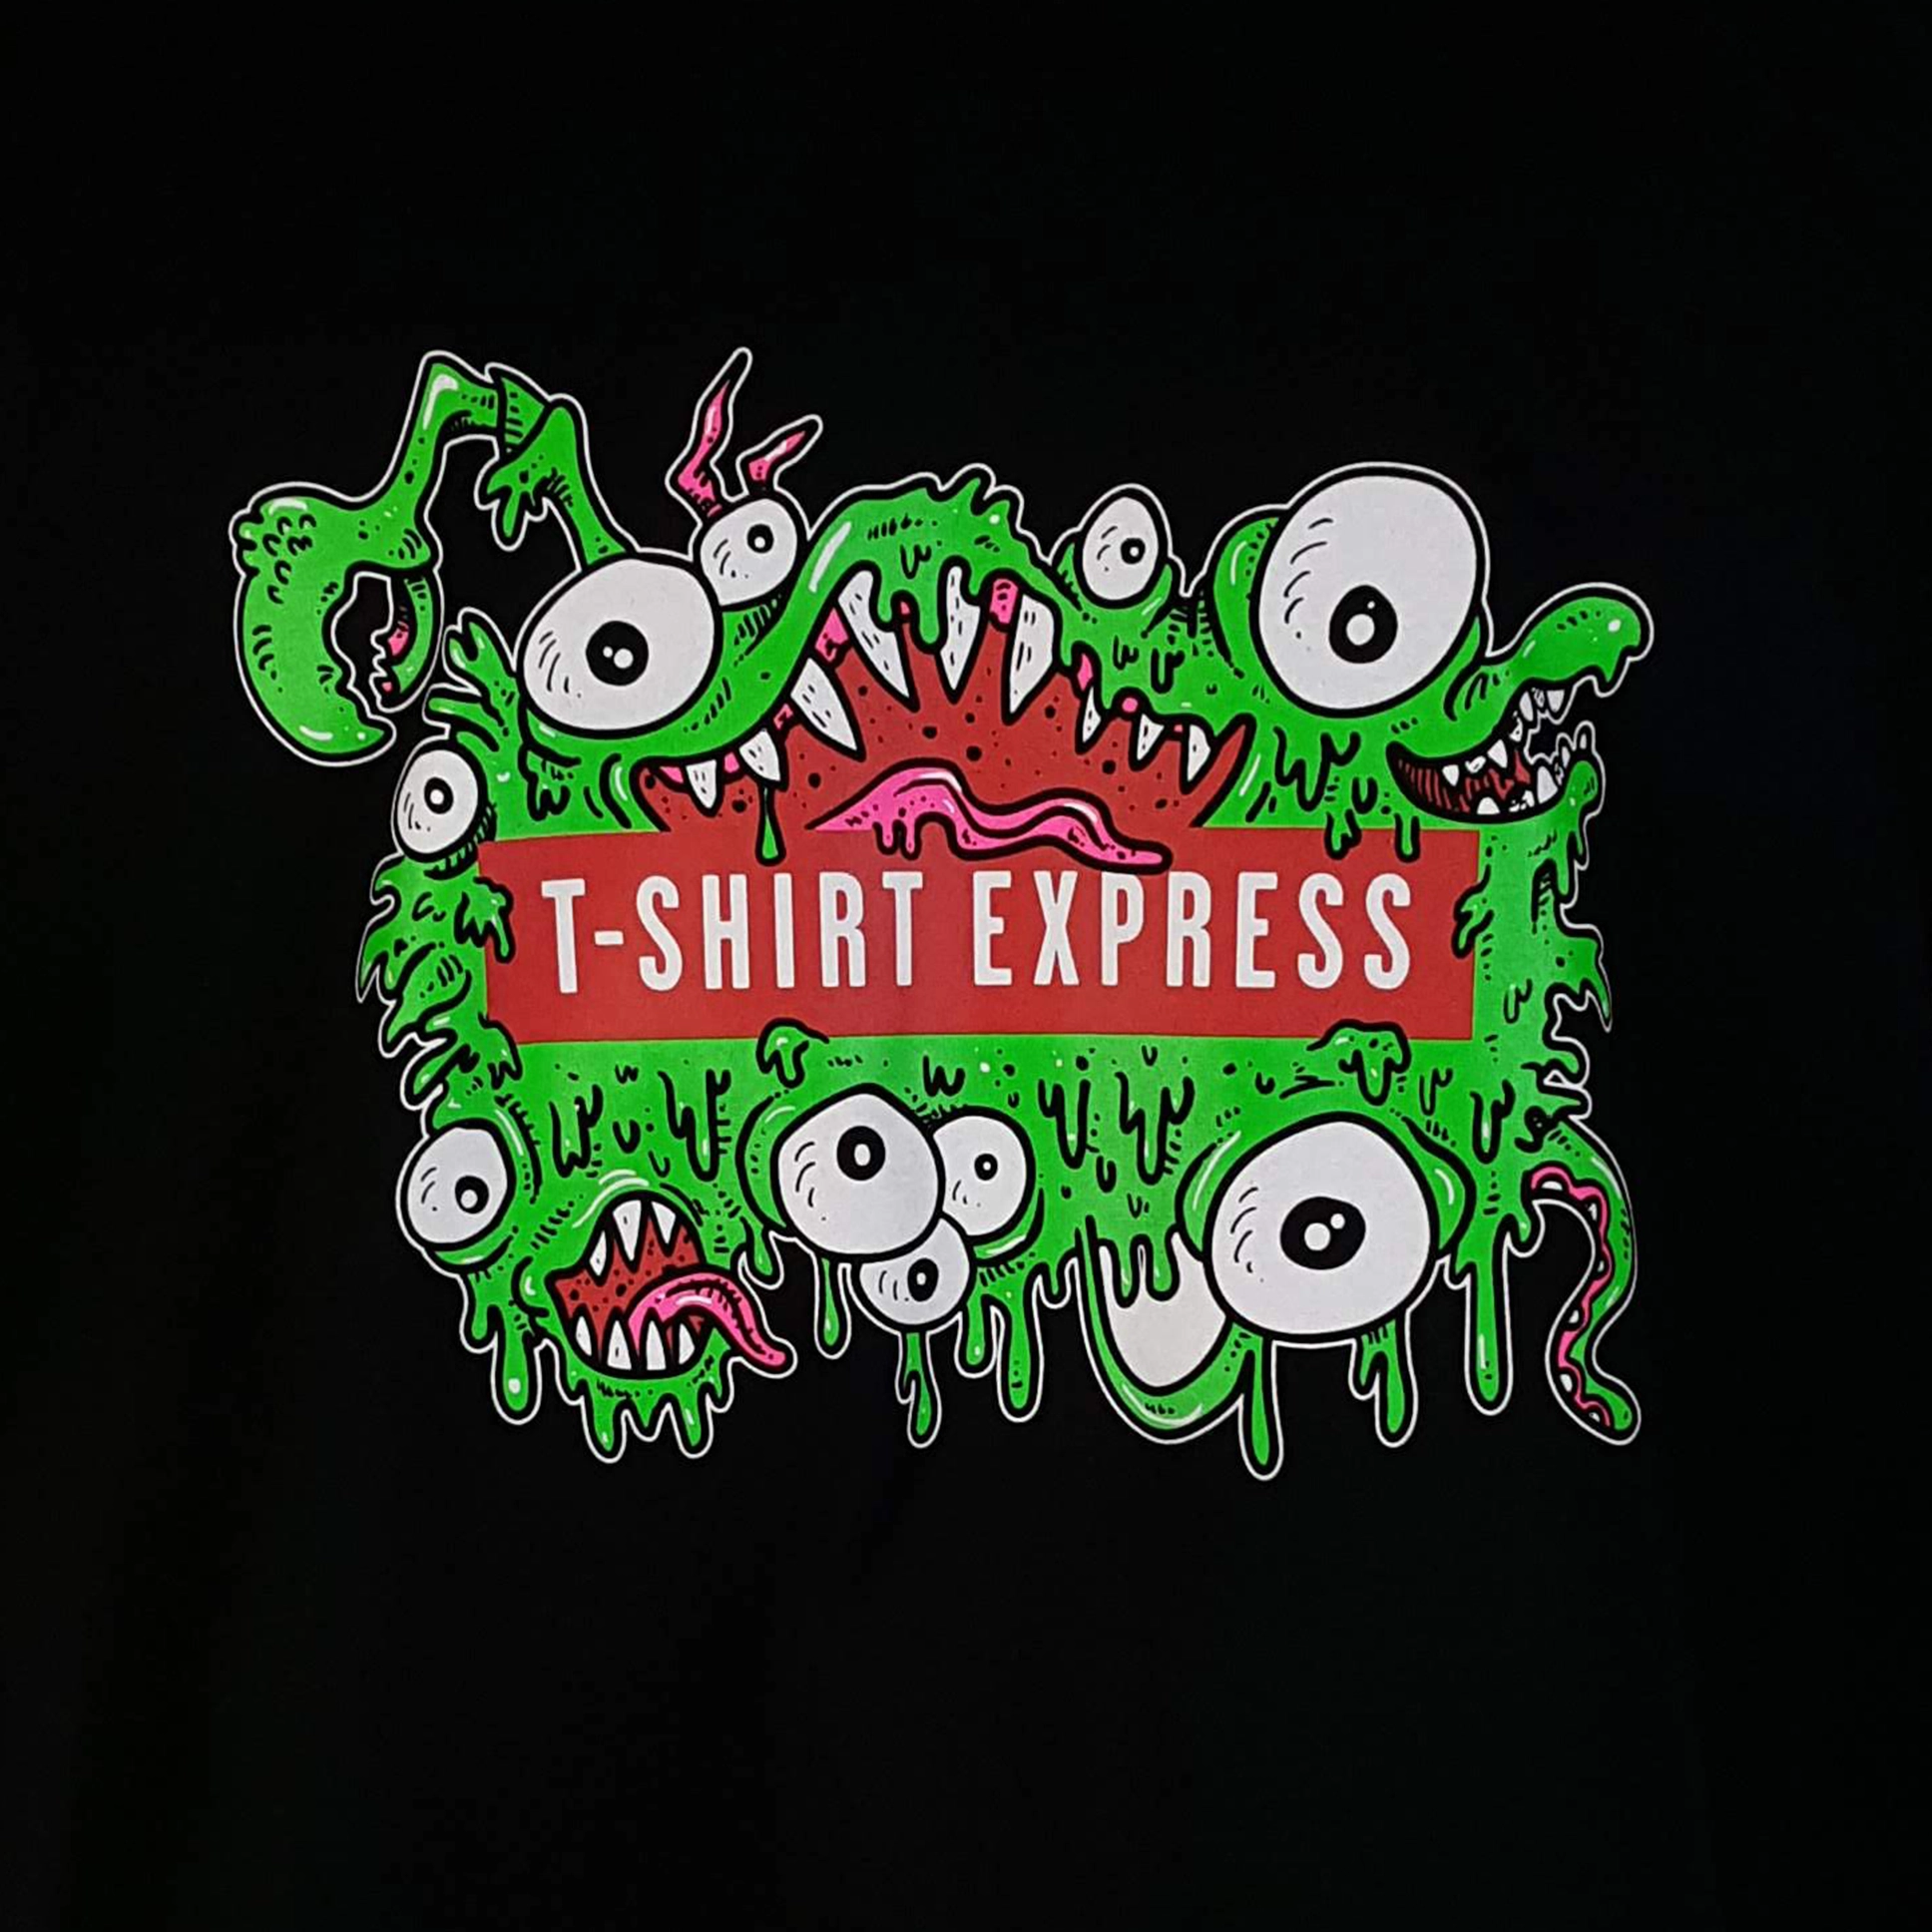 t-shirt express in London ohio